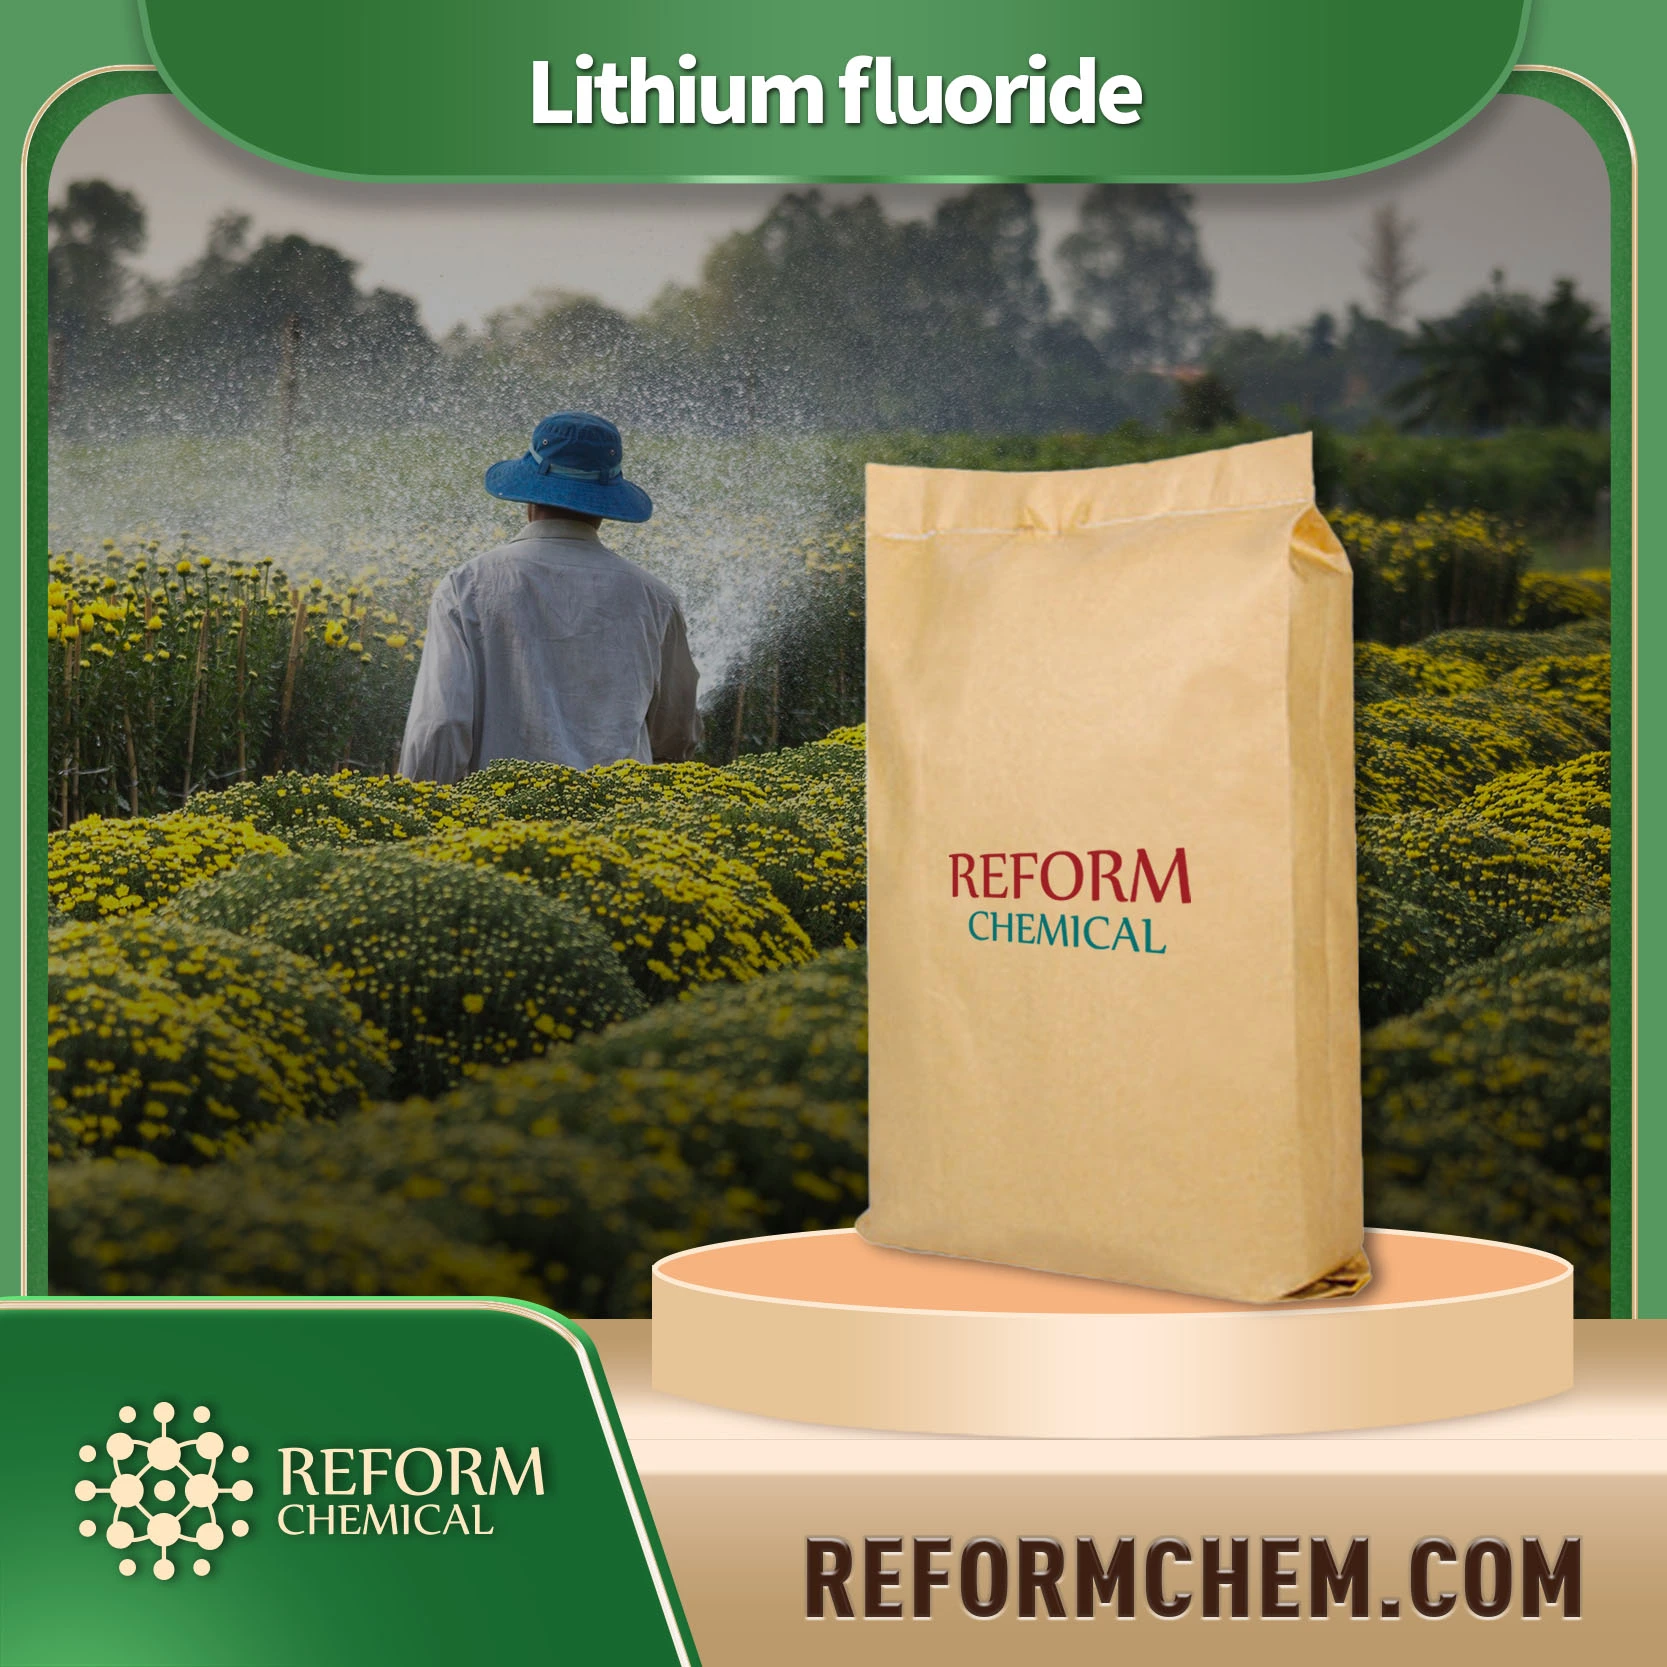 Lithium fluoride